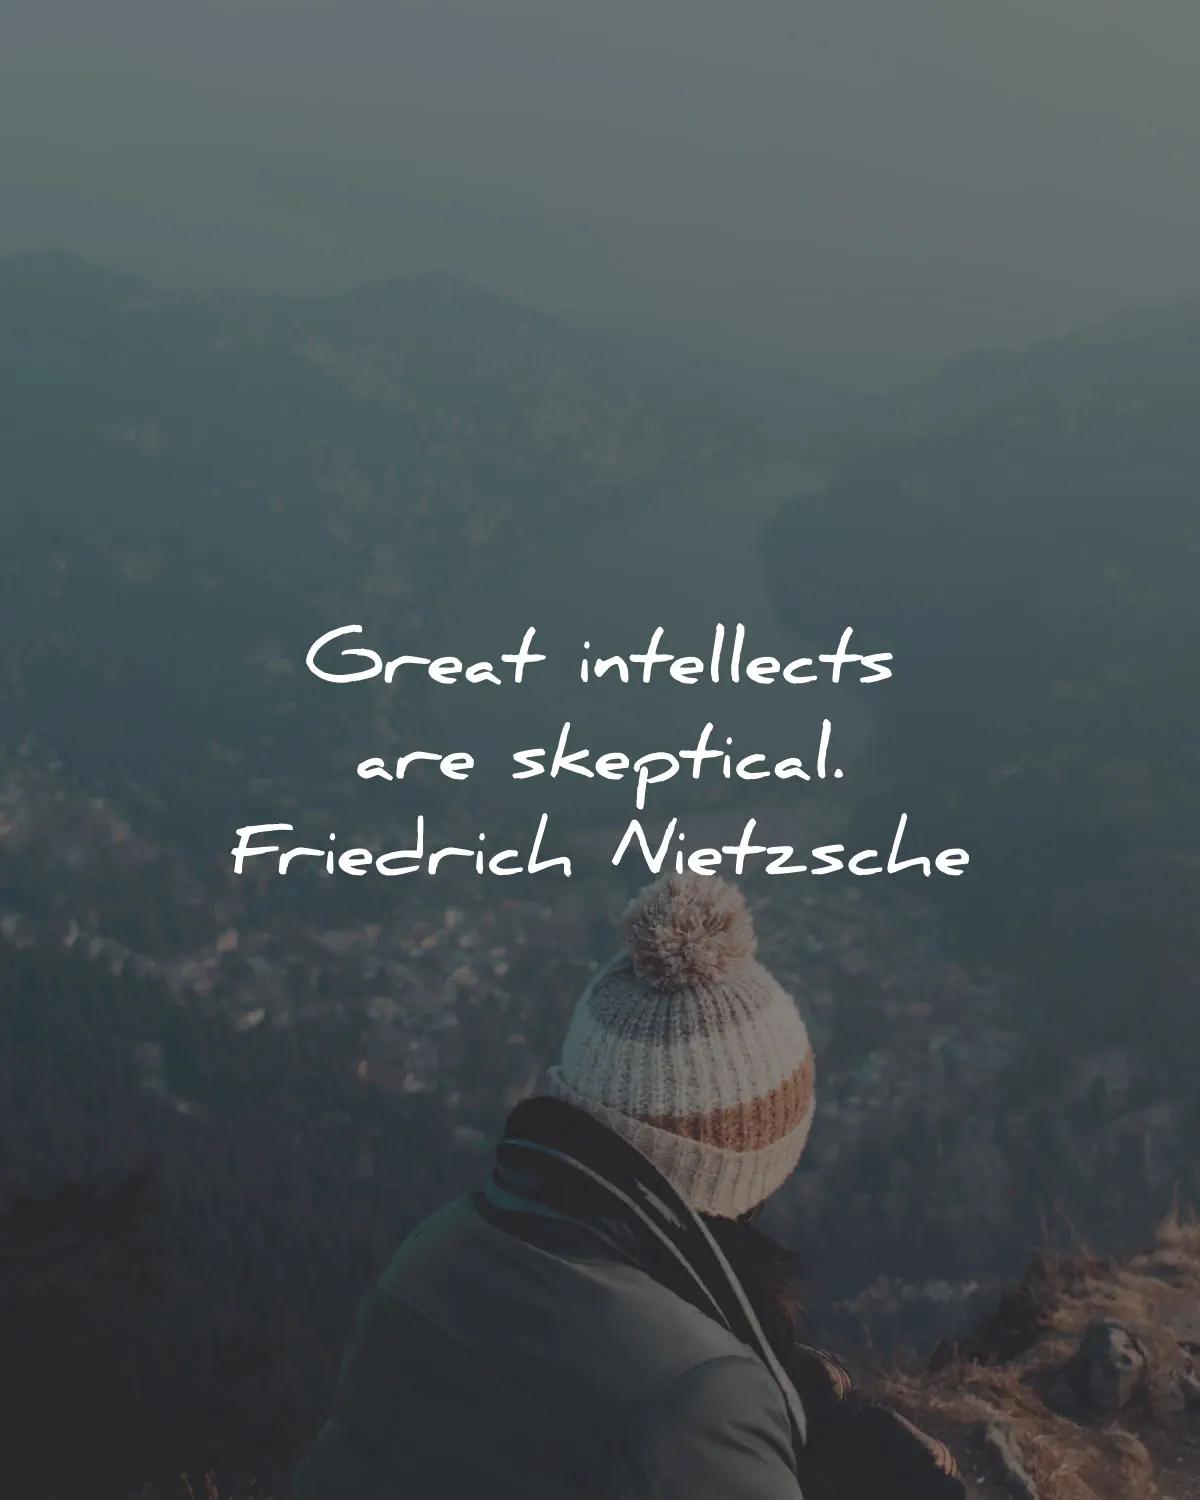 friedrich nietzsche quotes great intellects skeptical wisdom